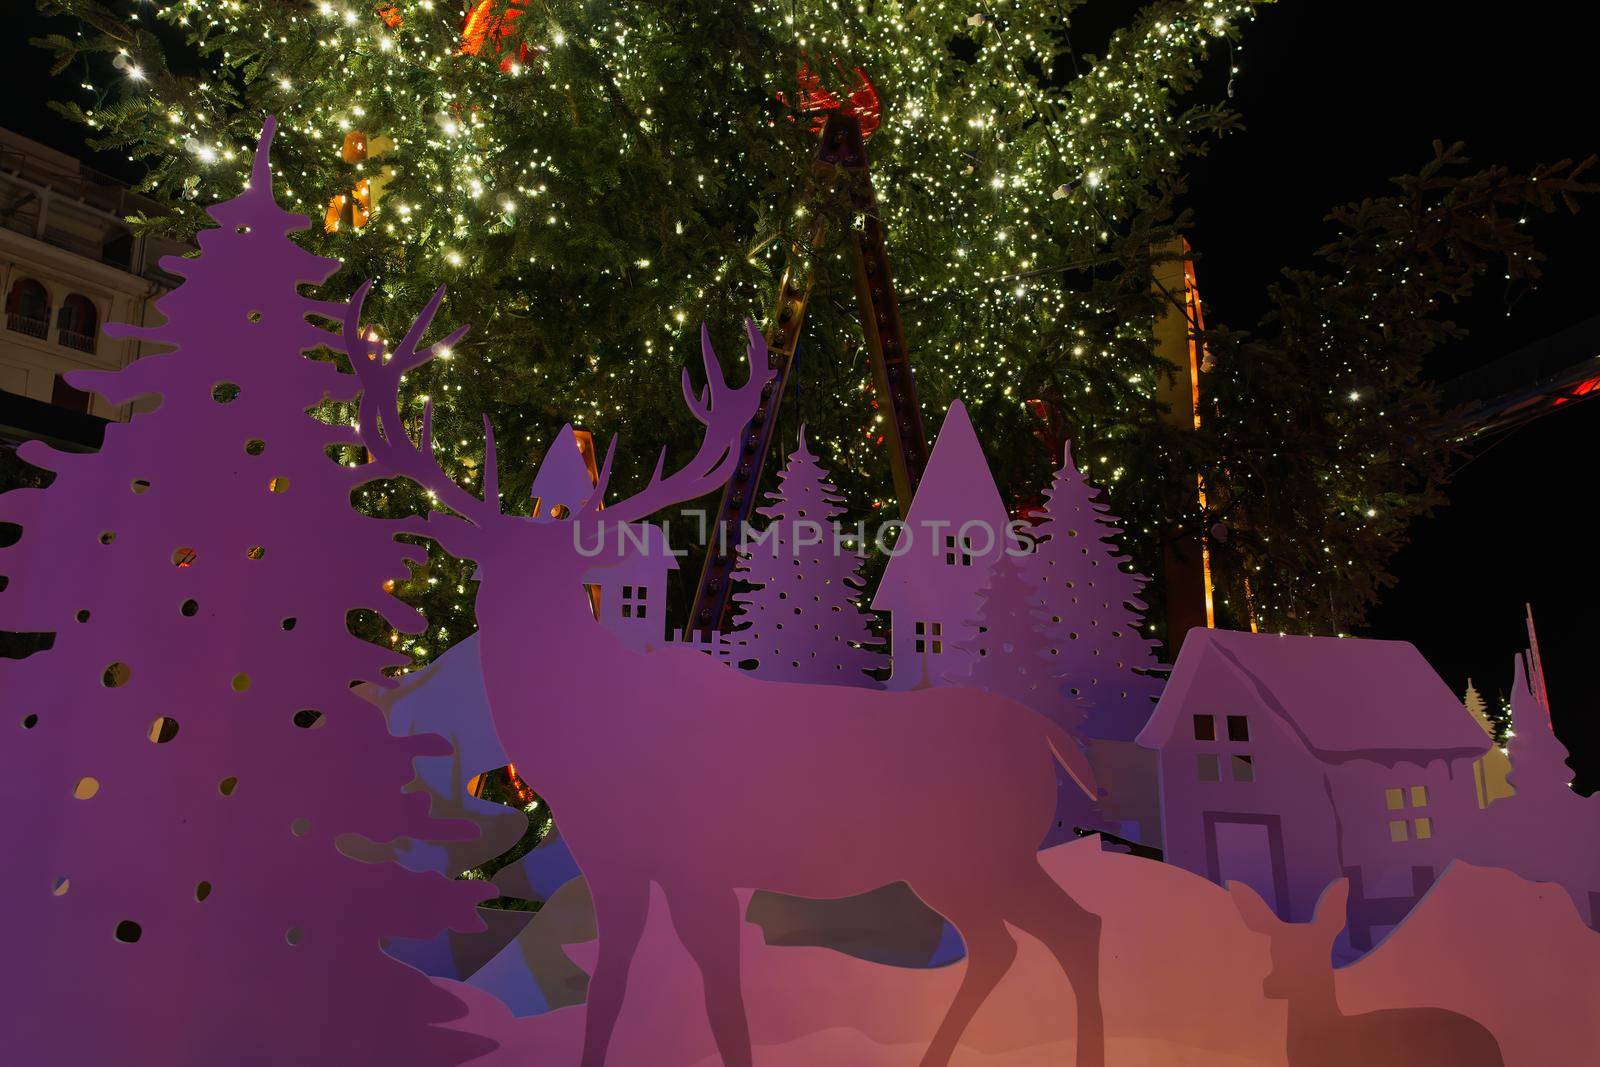 Night view of nativity scene figures around illuminated festive instalments at main city square.